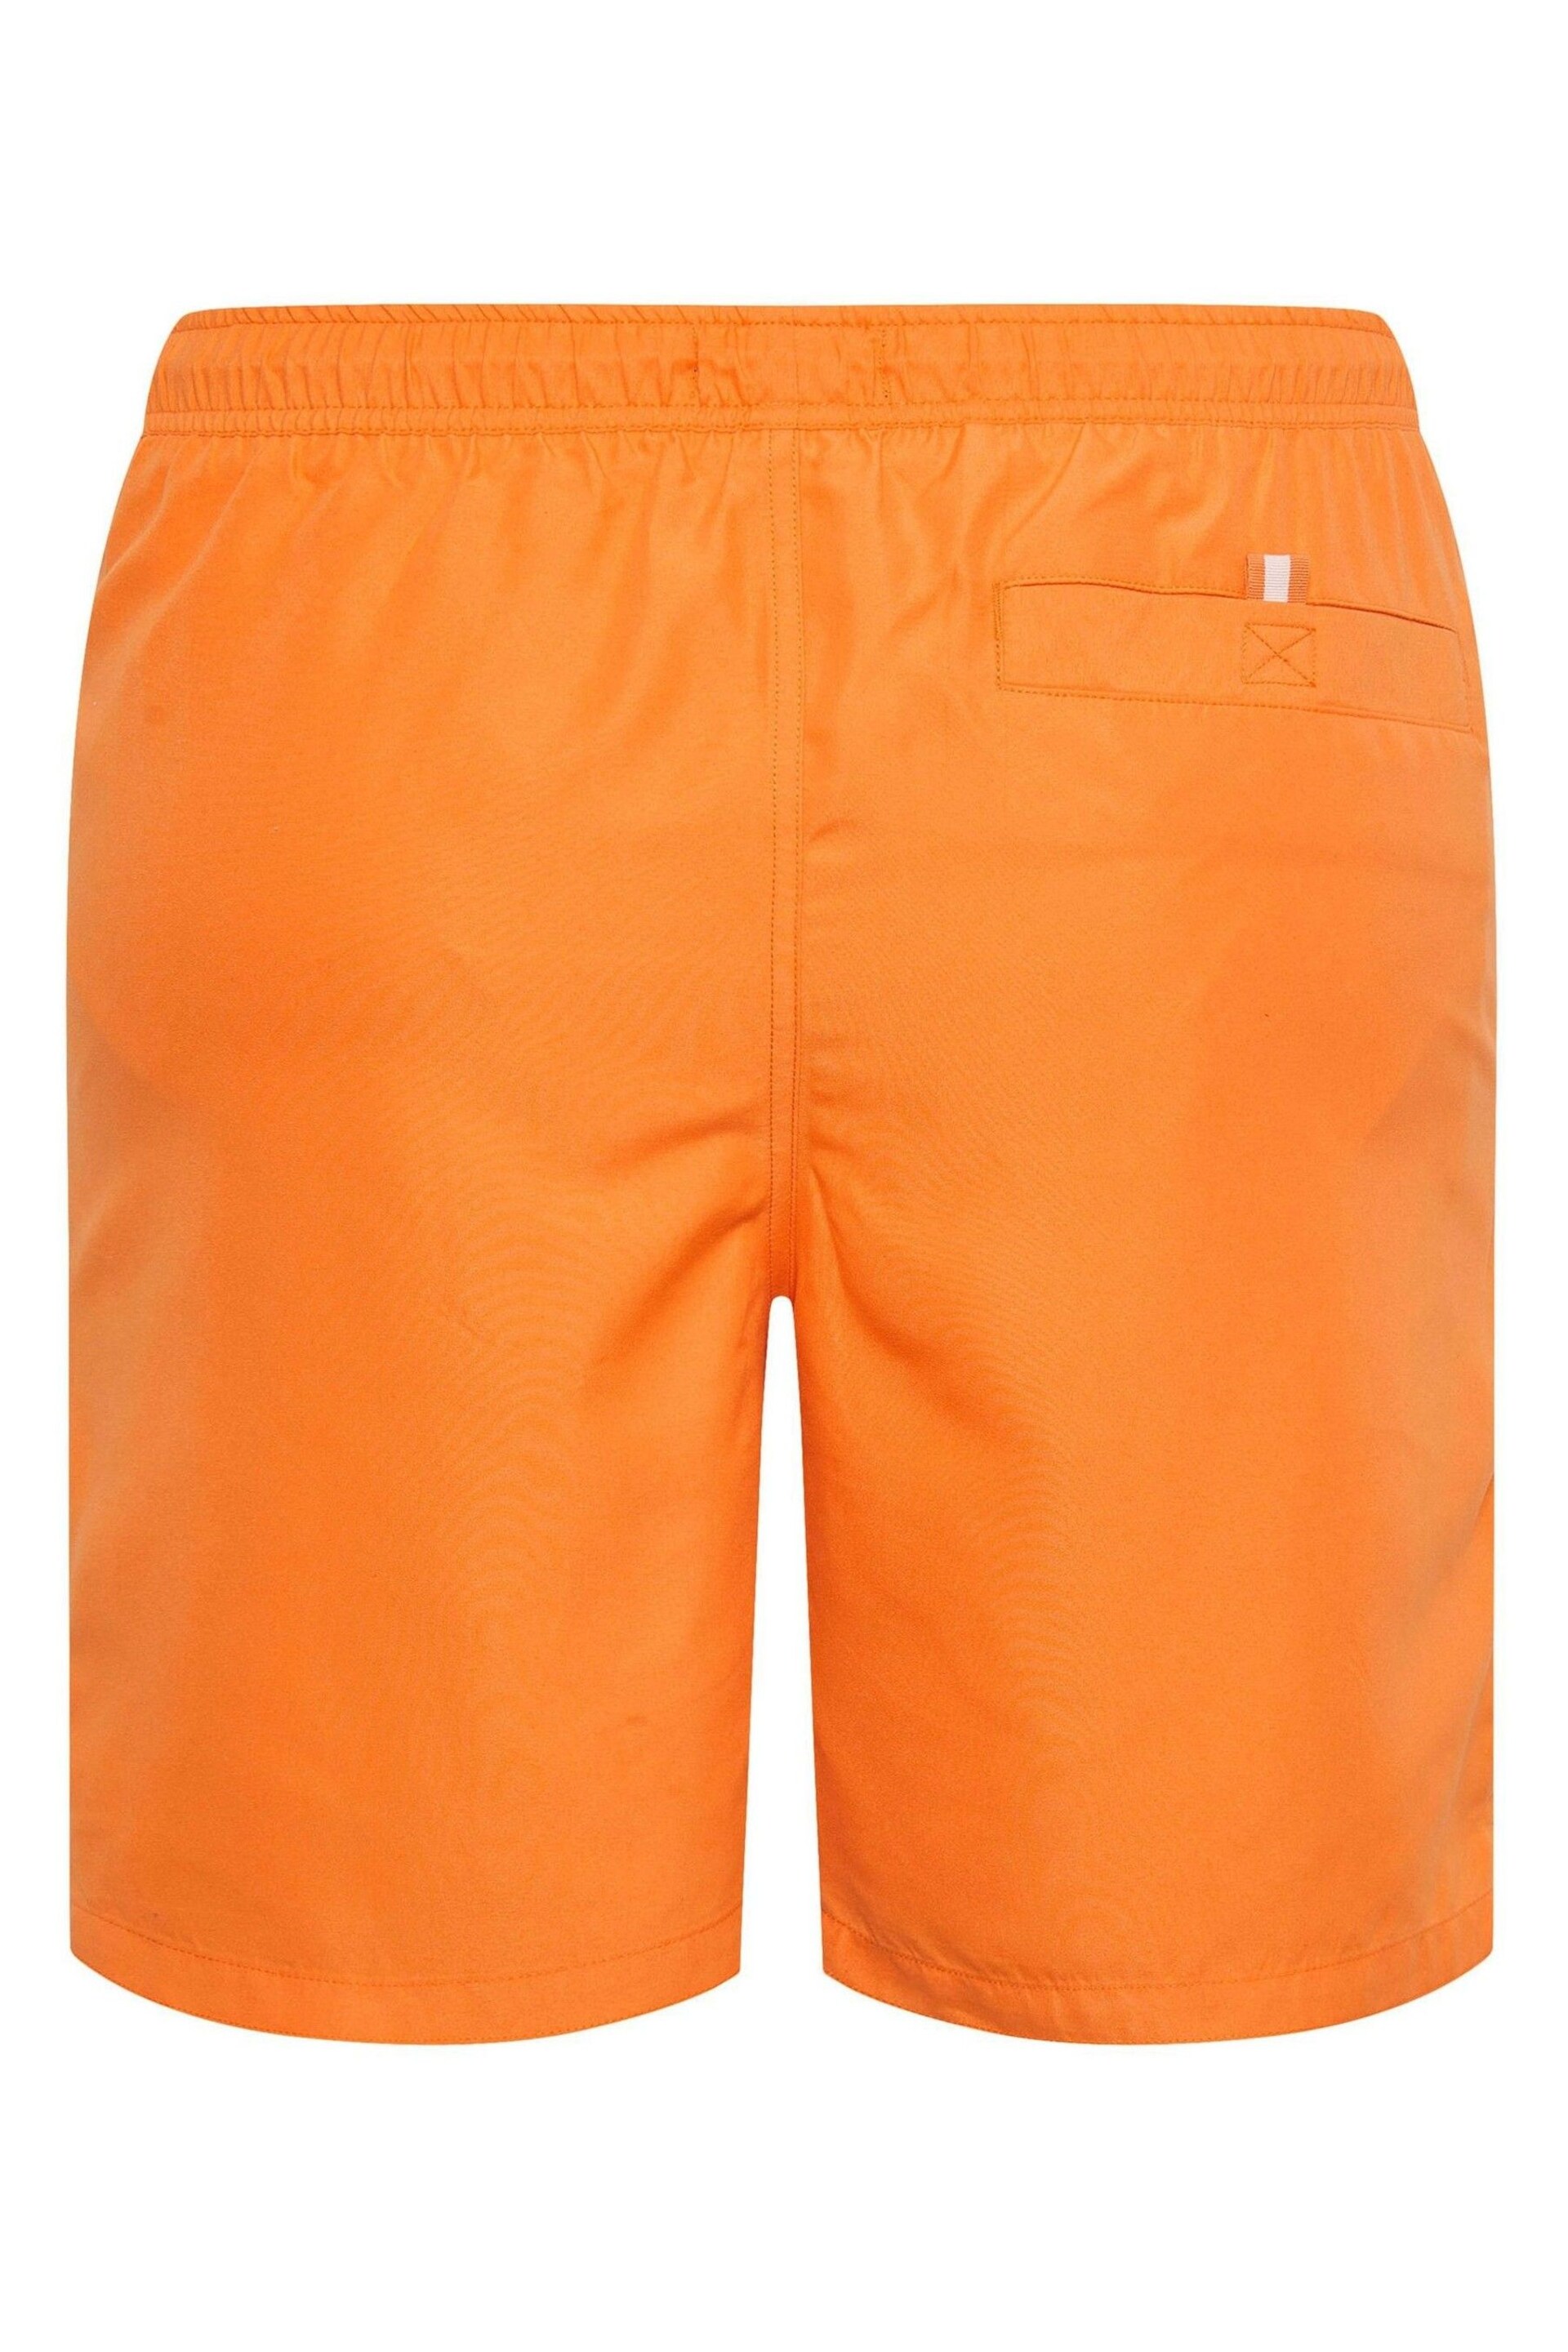 BadRhino Big & Tall Orange Plain Swim Shorts - Image 5 of 5